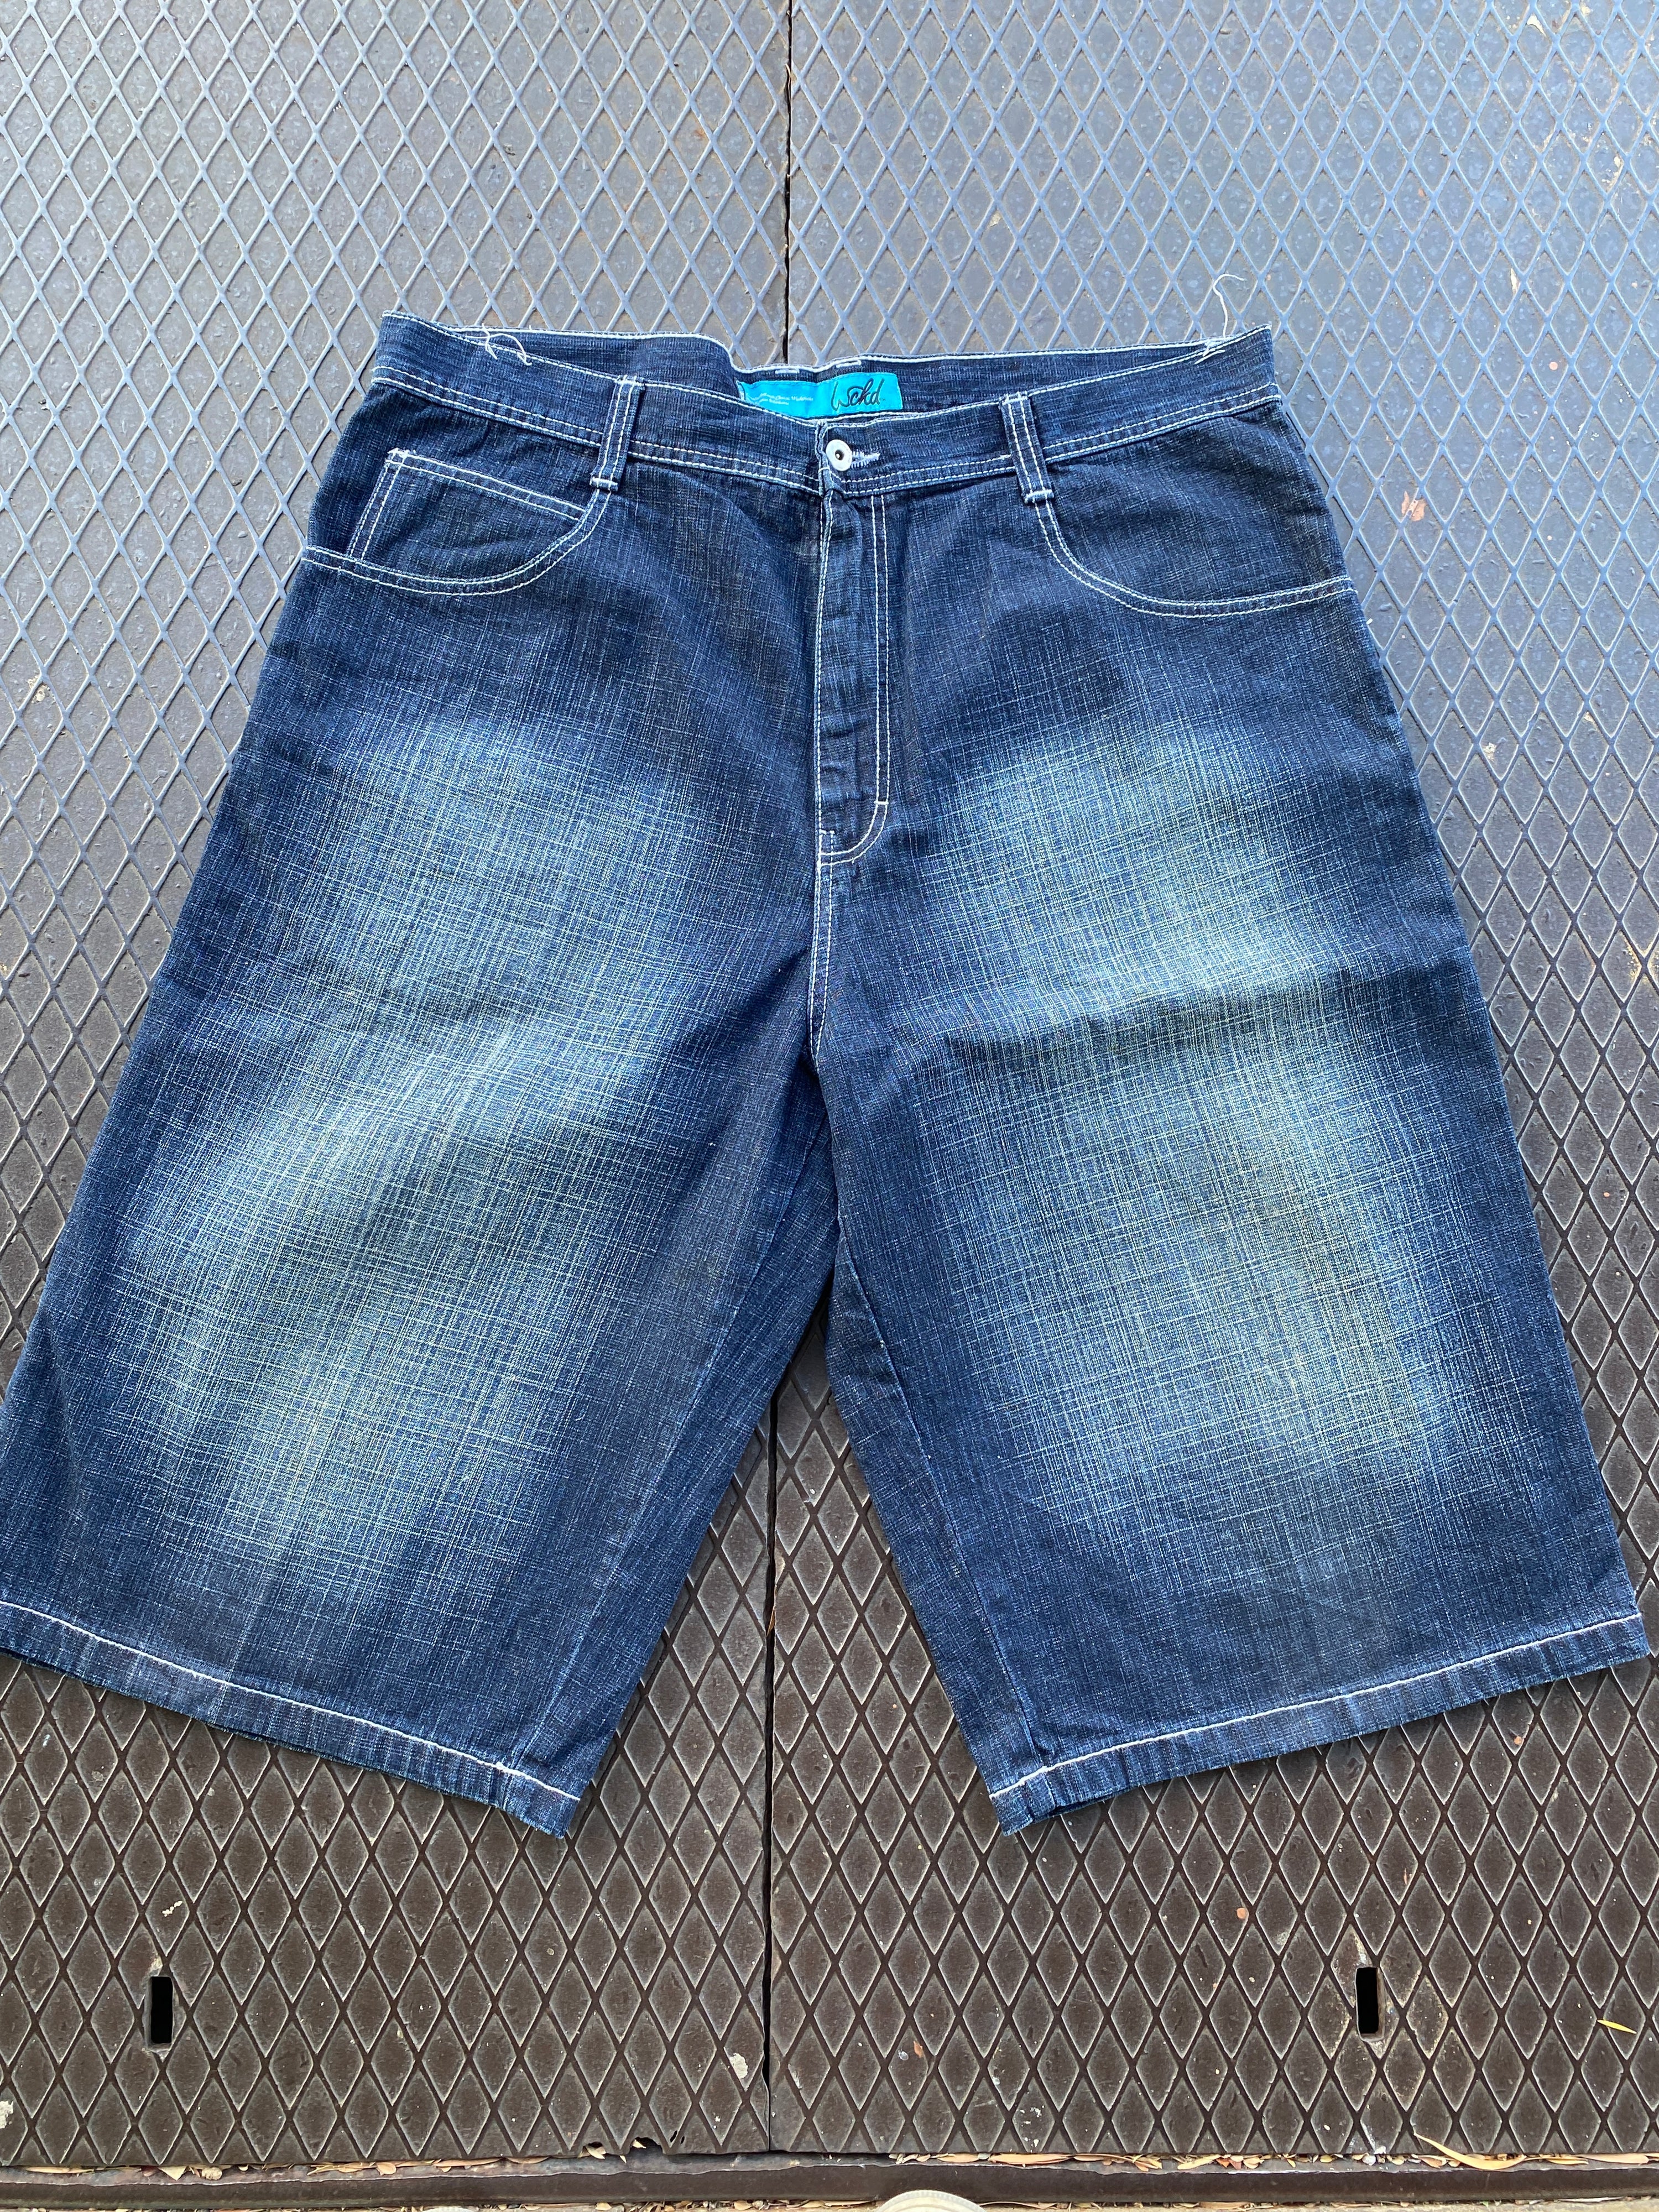 40 - WCKD Denim Dark Blue Shorts Plaid Accented Pockets